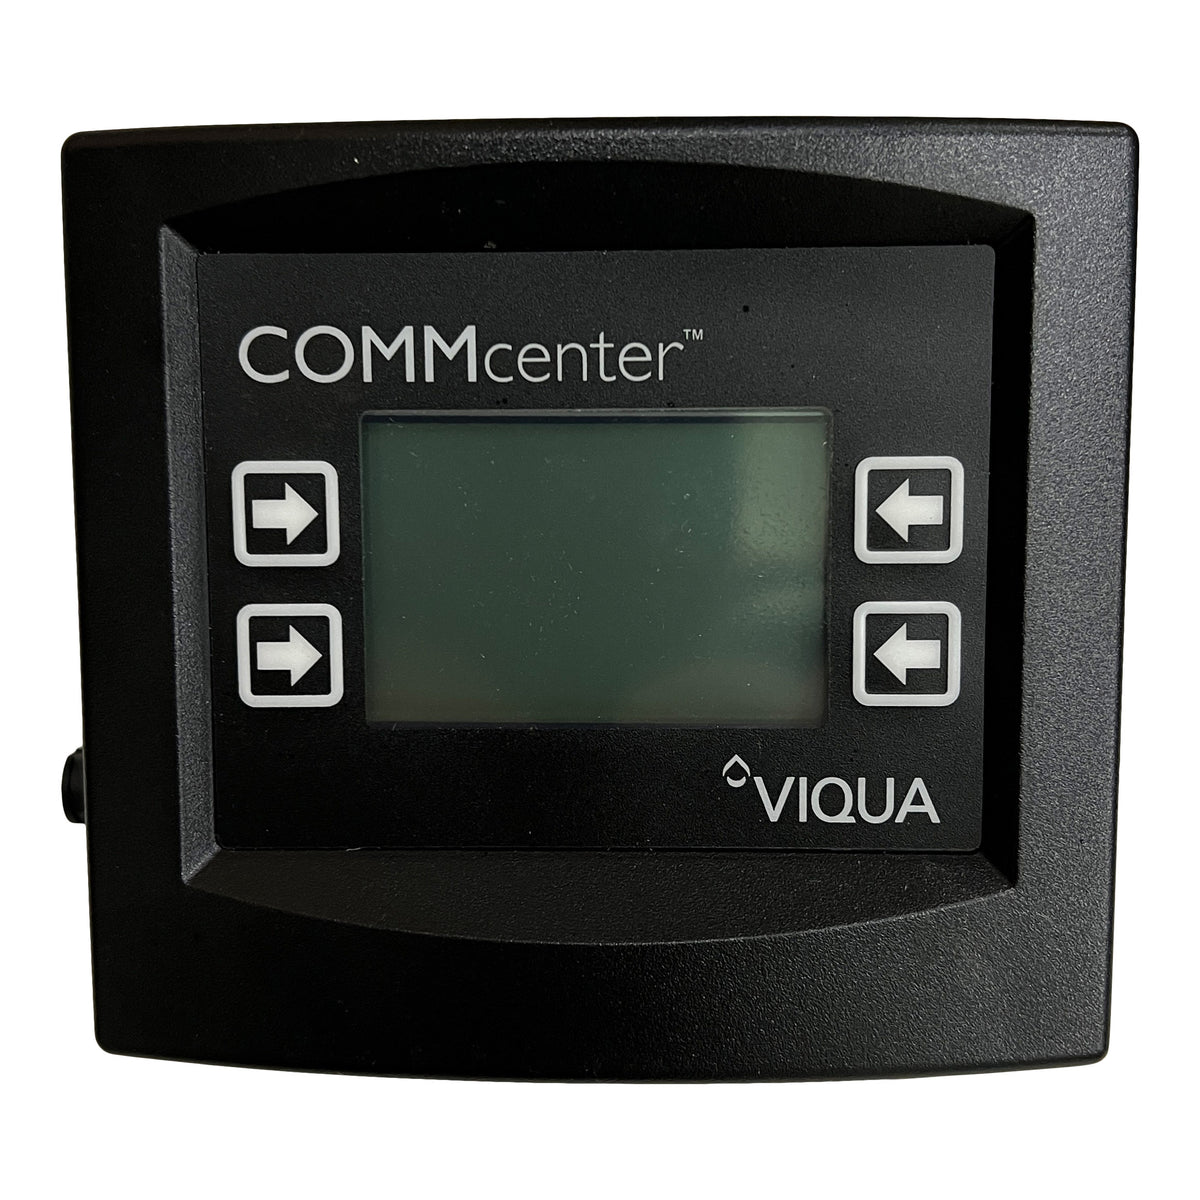 Viqua COMMcenter 270272-R